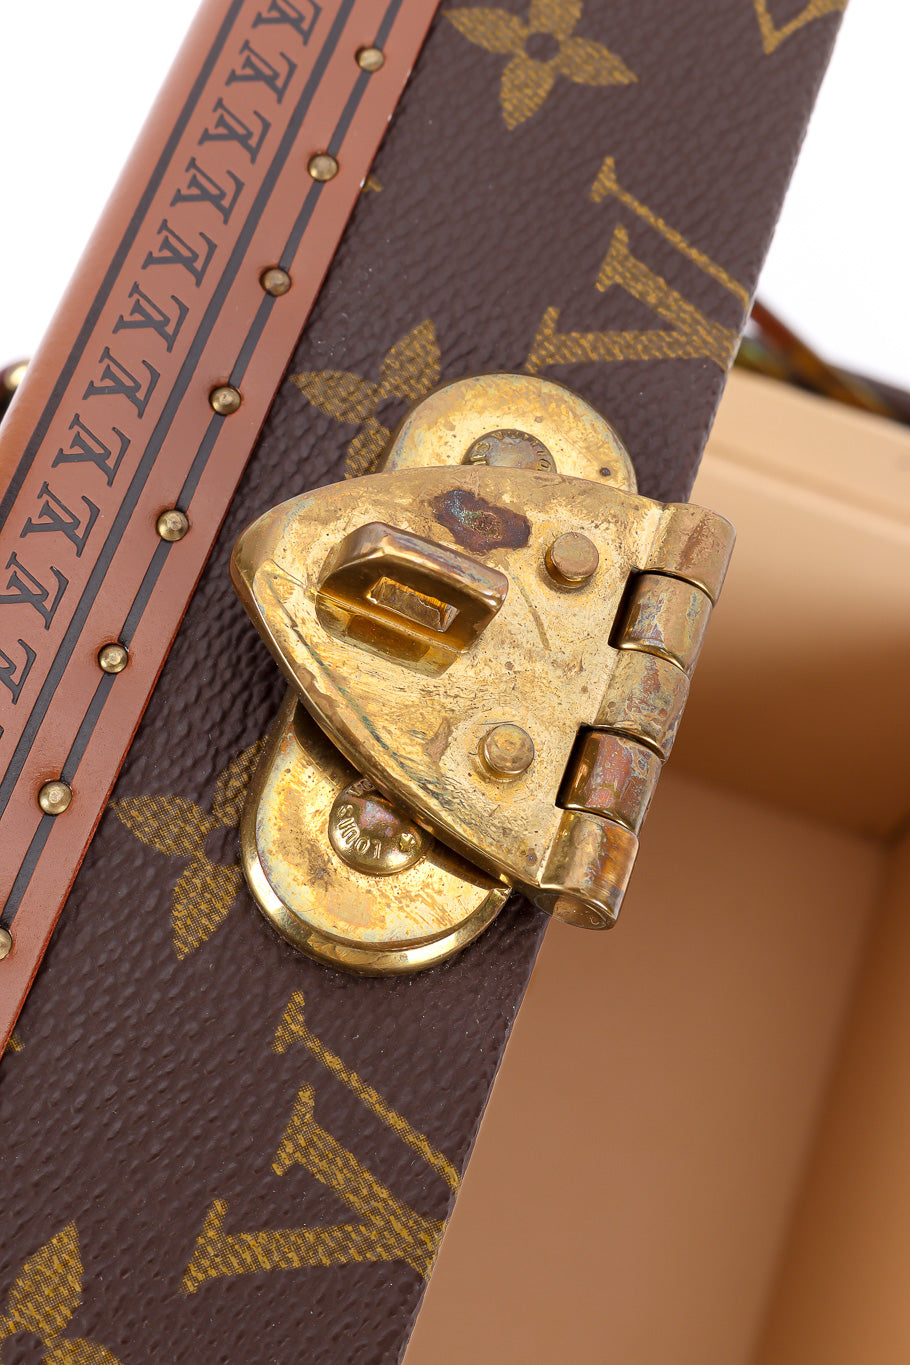 Sold at Auction: Louis Vuitton Speedy 30 Handbag - Monogram Empreinte, cream  leather, double strap handles, with padlock (no key), original box, label,  mini brochure. 30cm long, 22cm high.